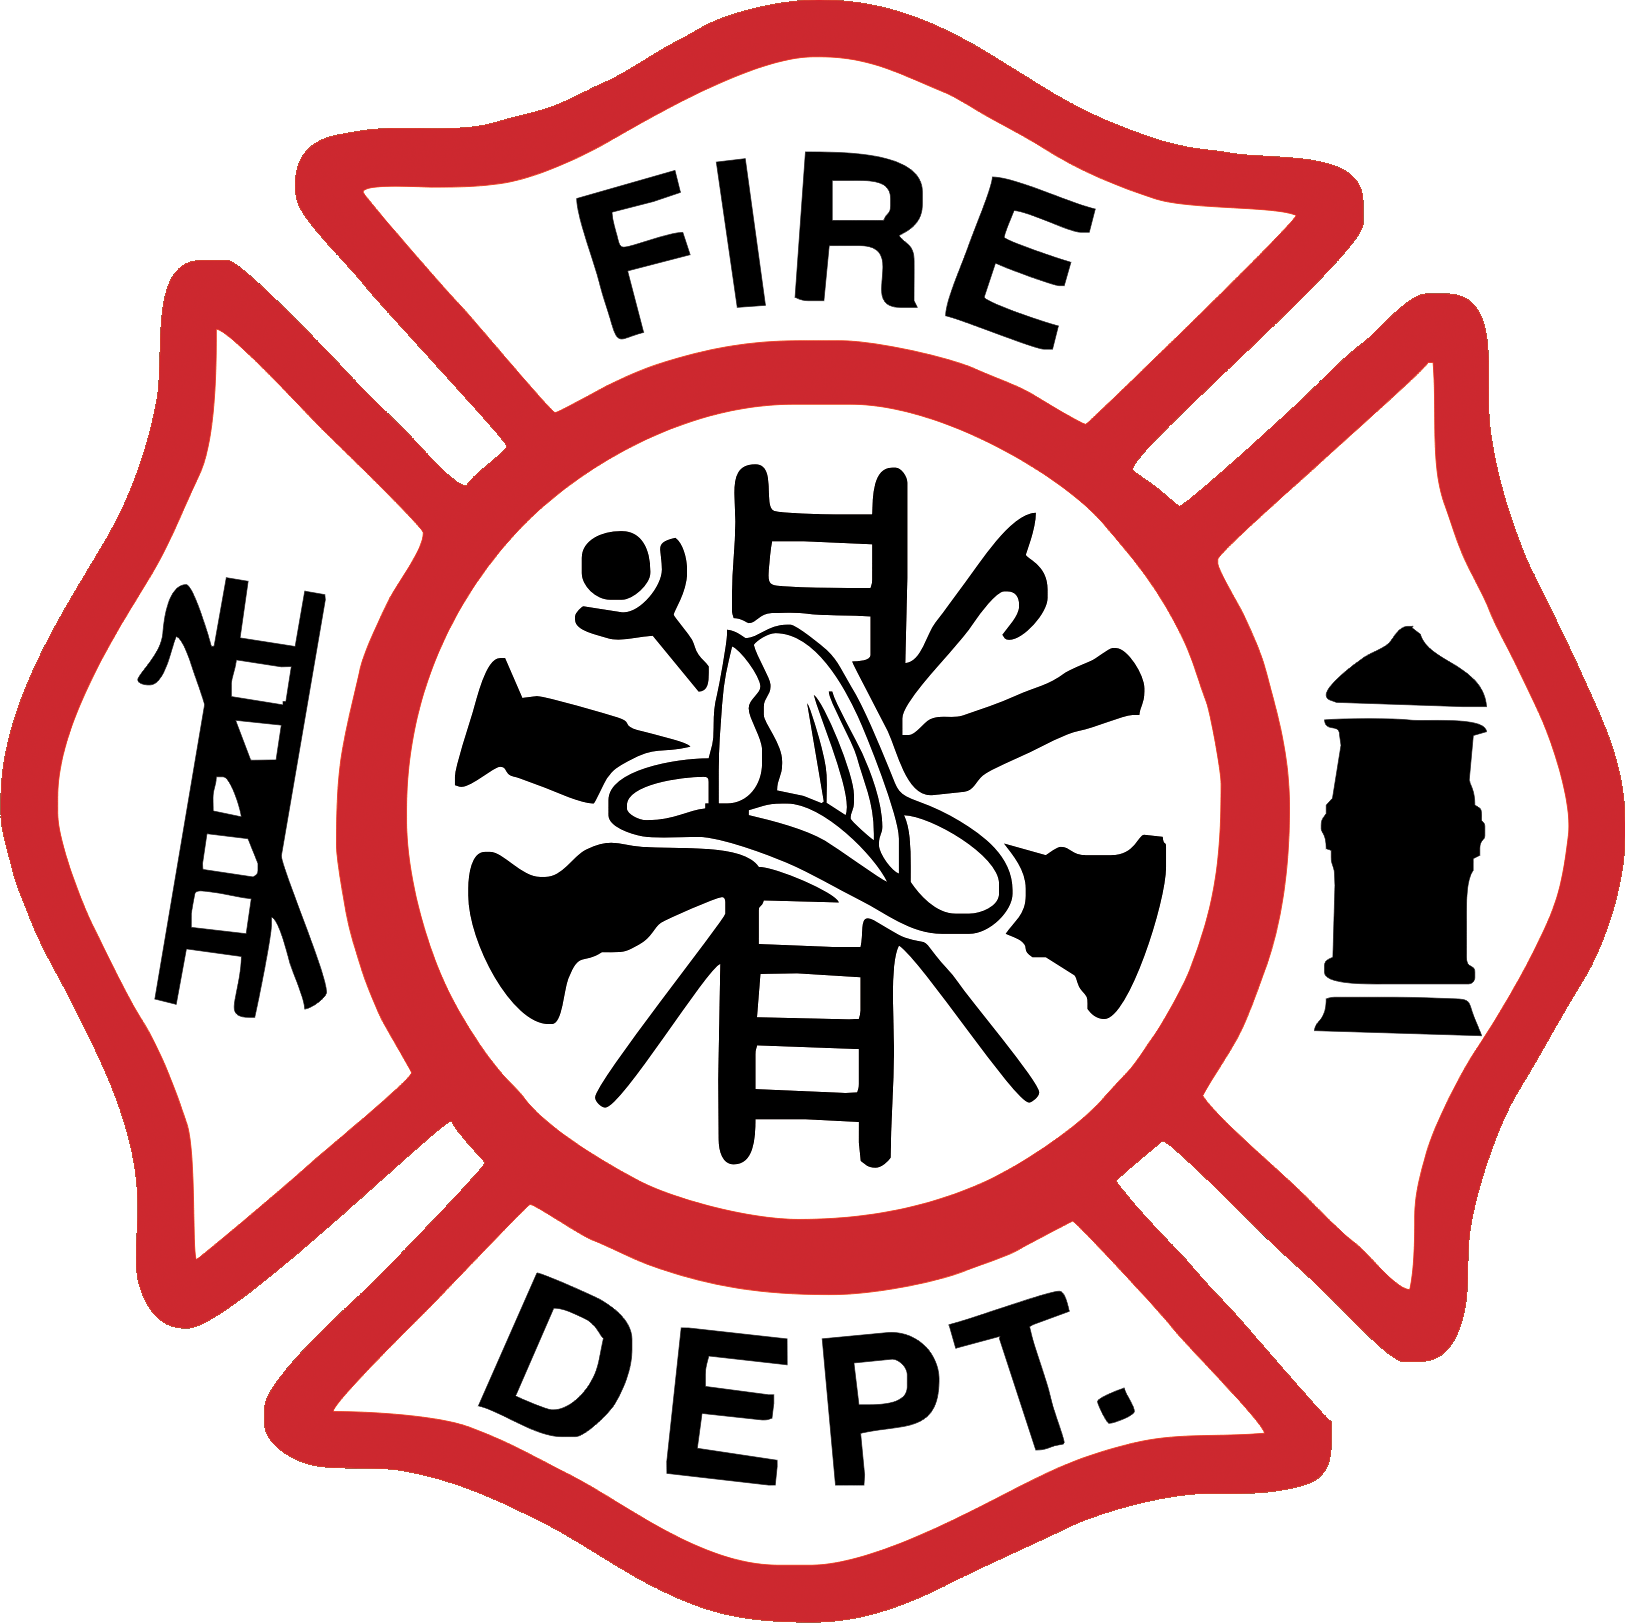 Firestation Logo - Fire station Logos